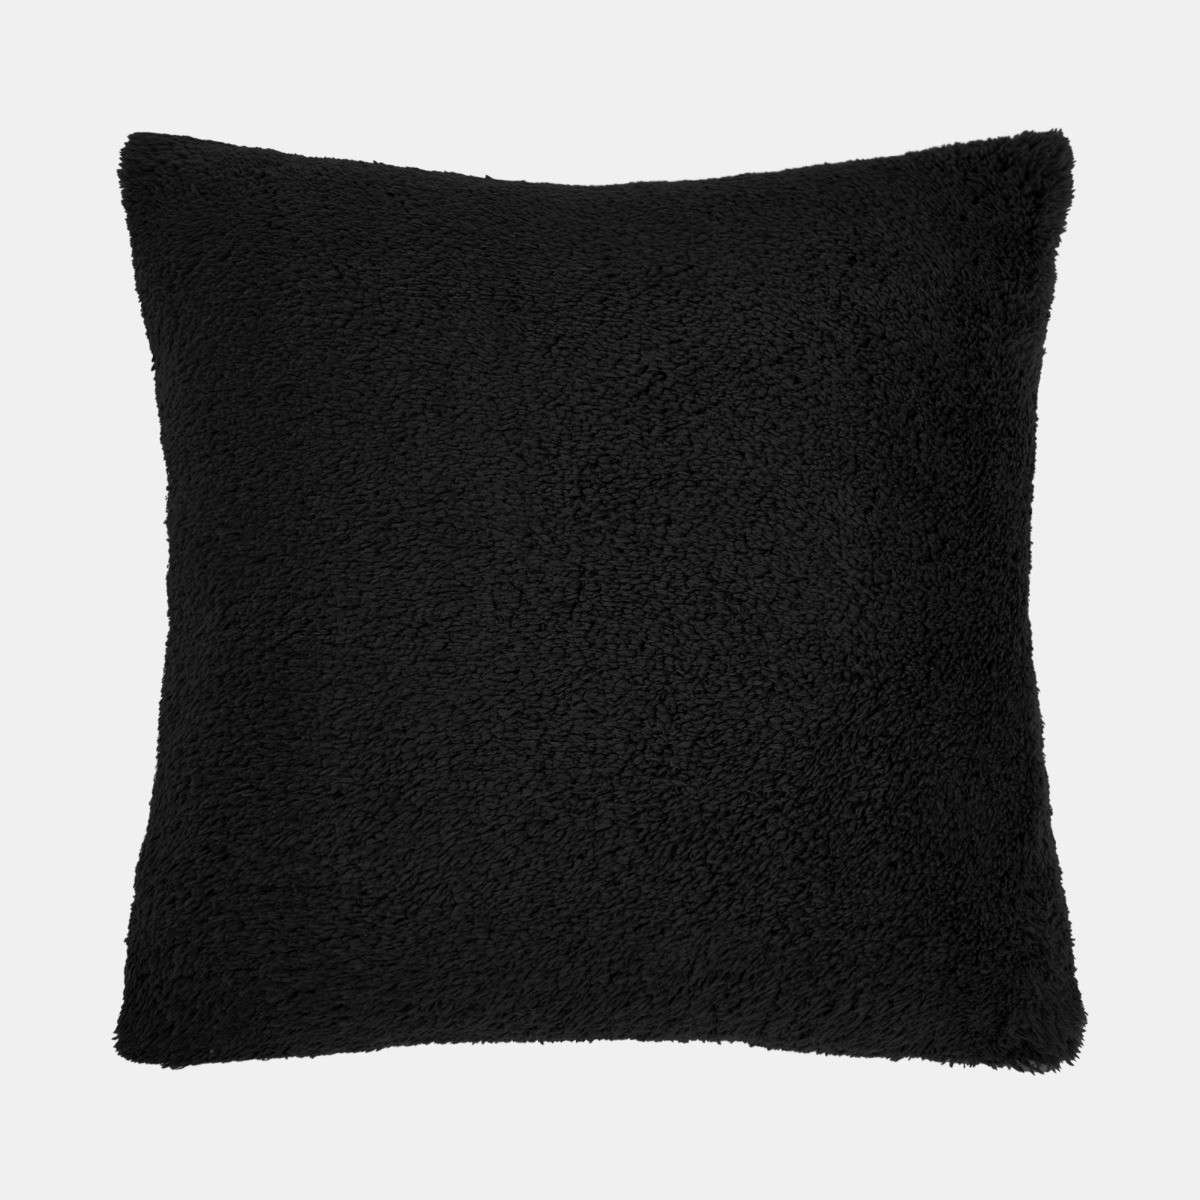 Brentfords Teddy Cushion Covers - Black>